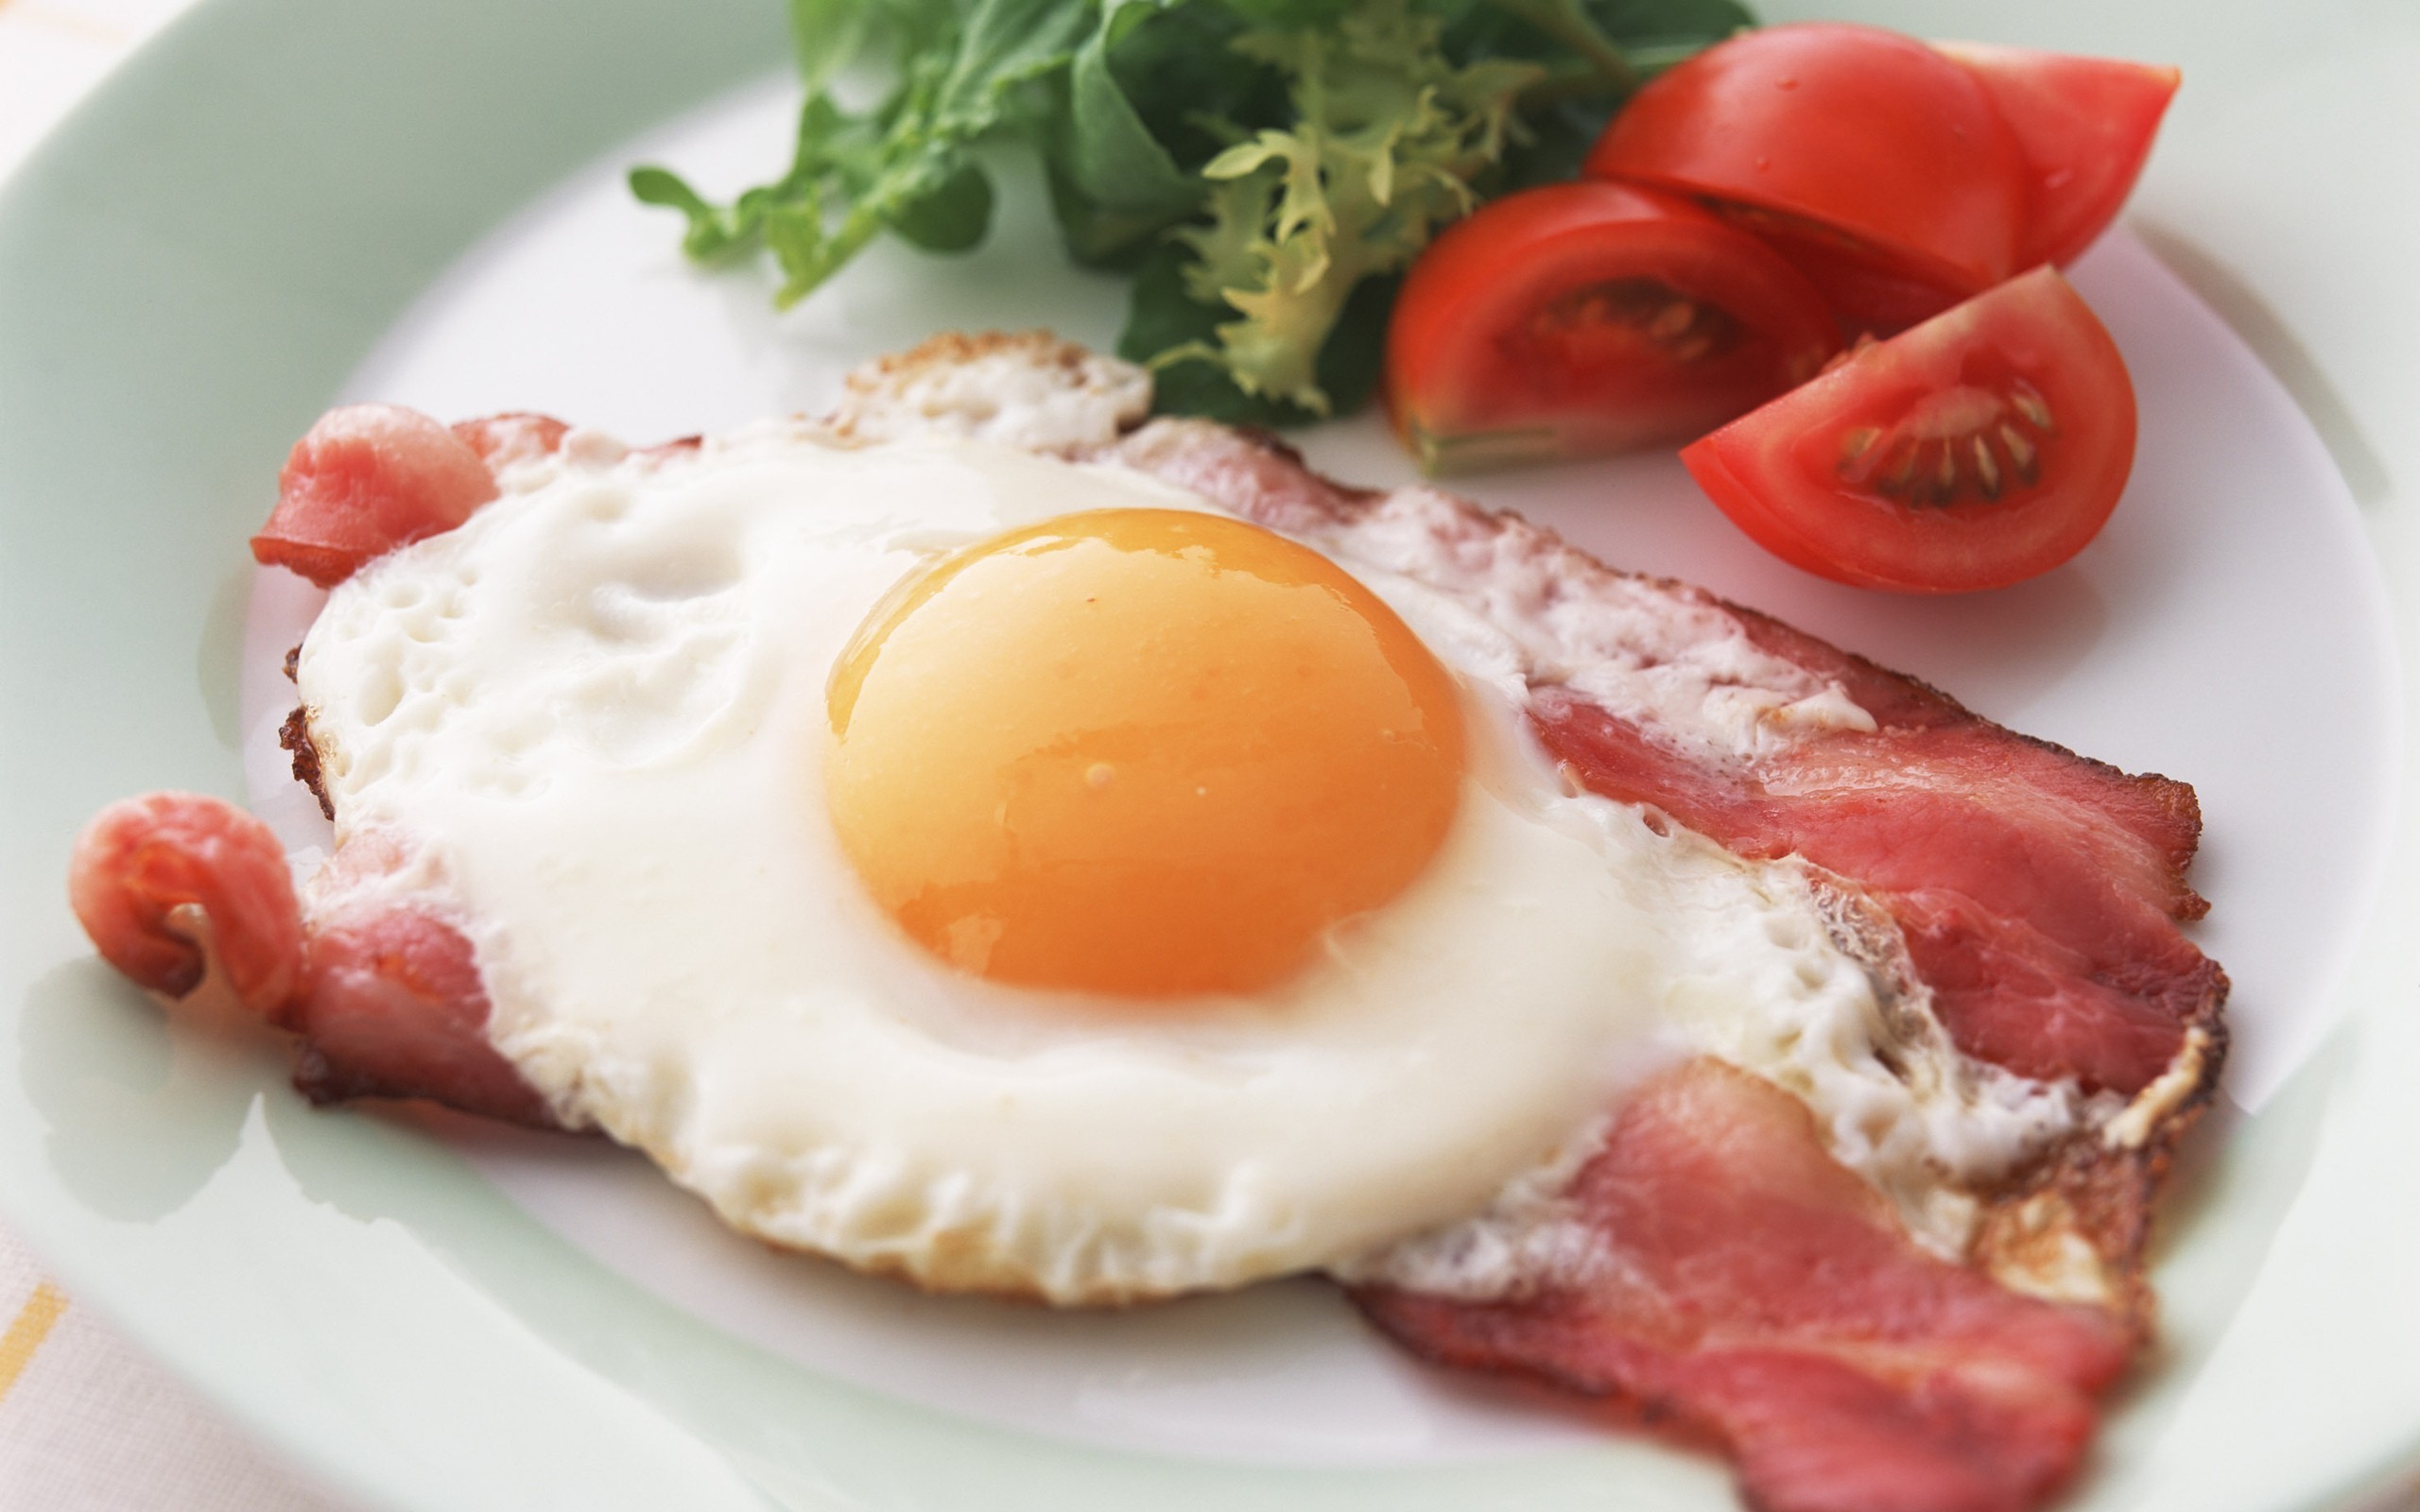 General 2560x1600 eggs bacon food tomatoes salad closeup breakfast plates